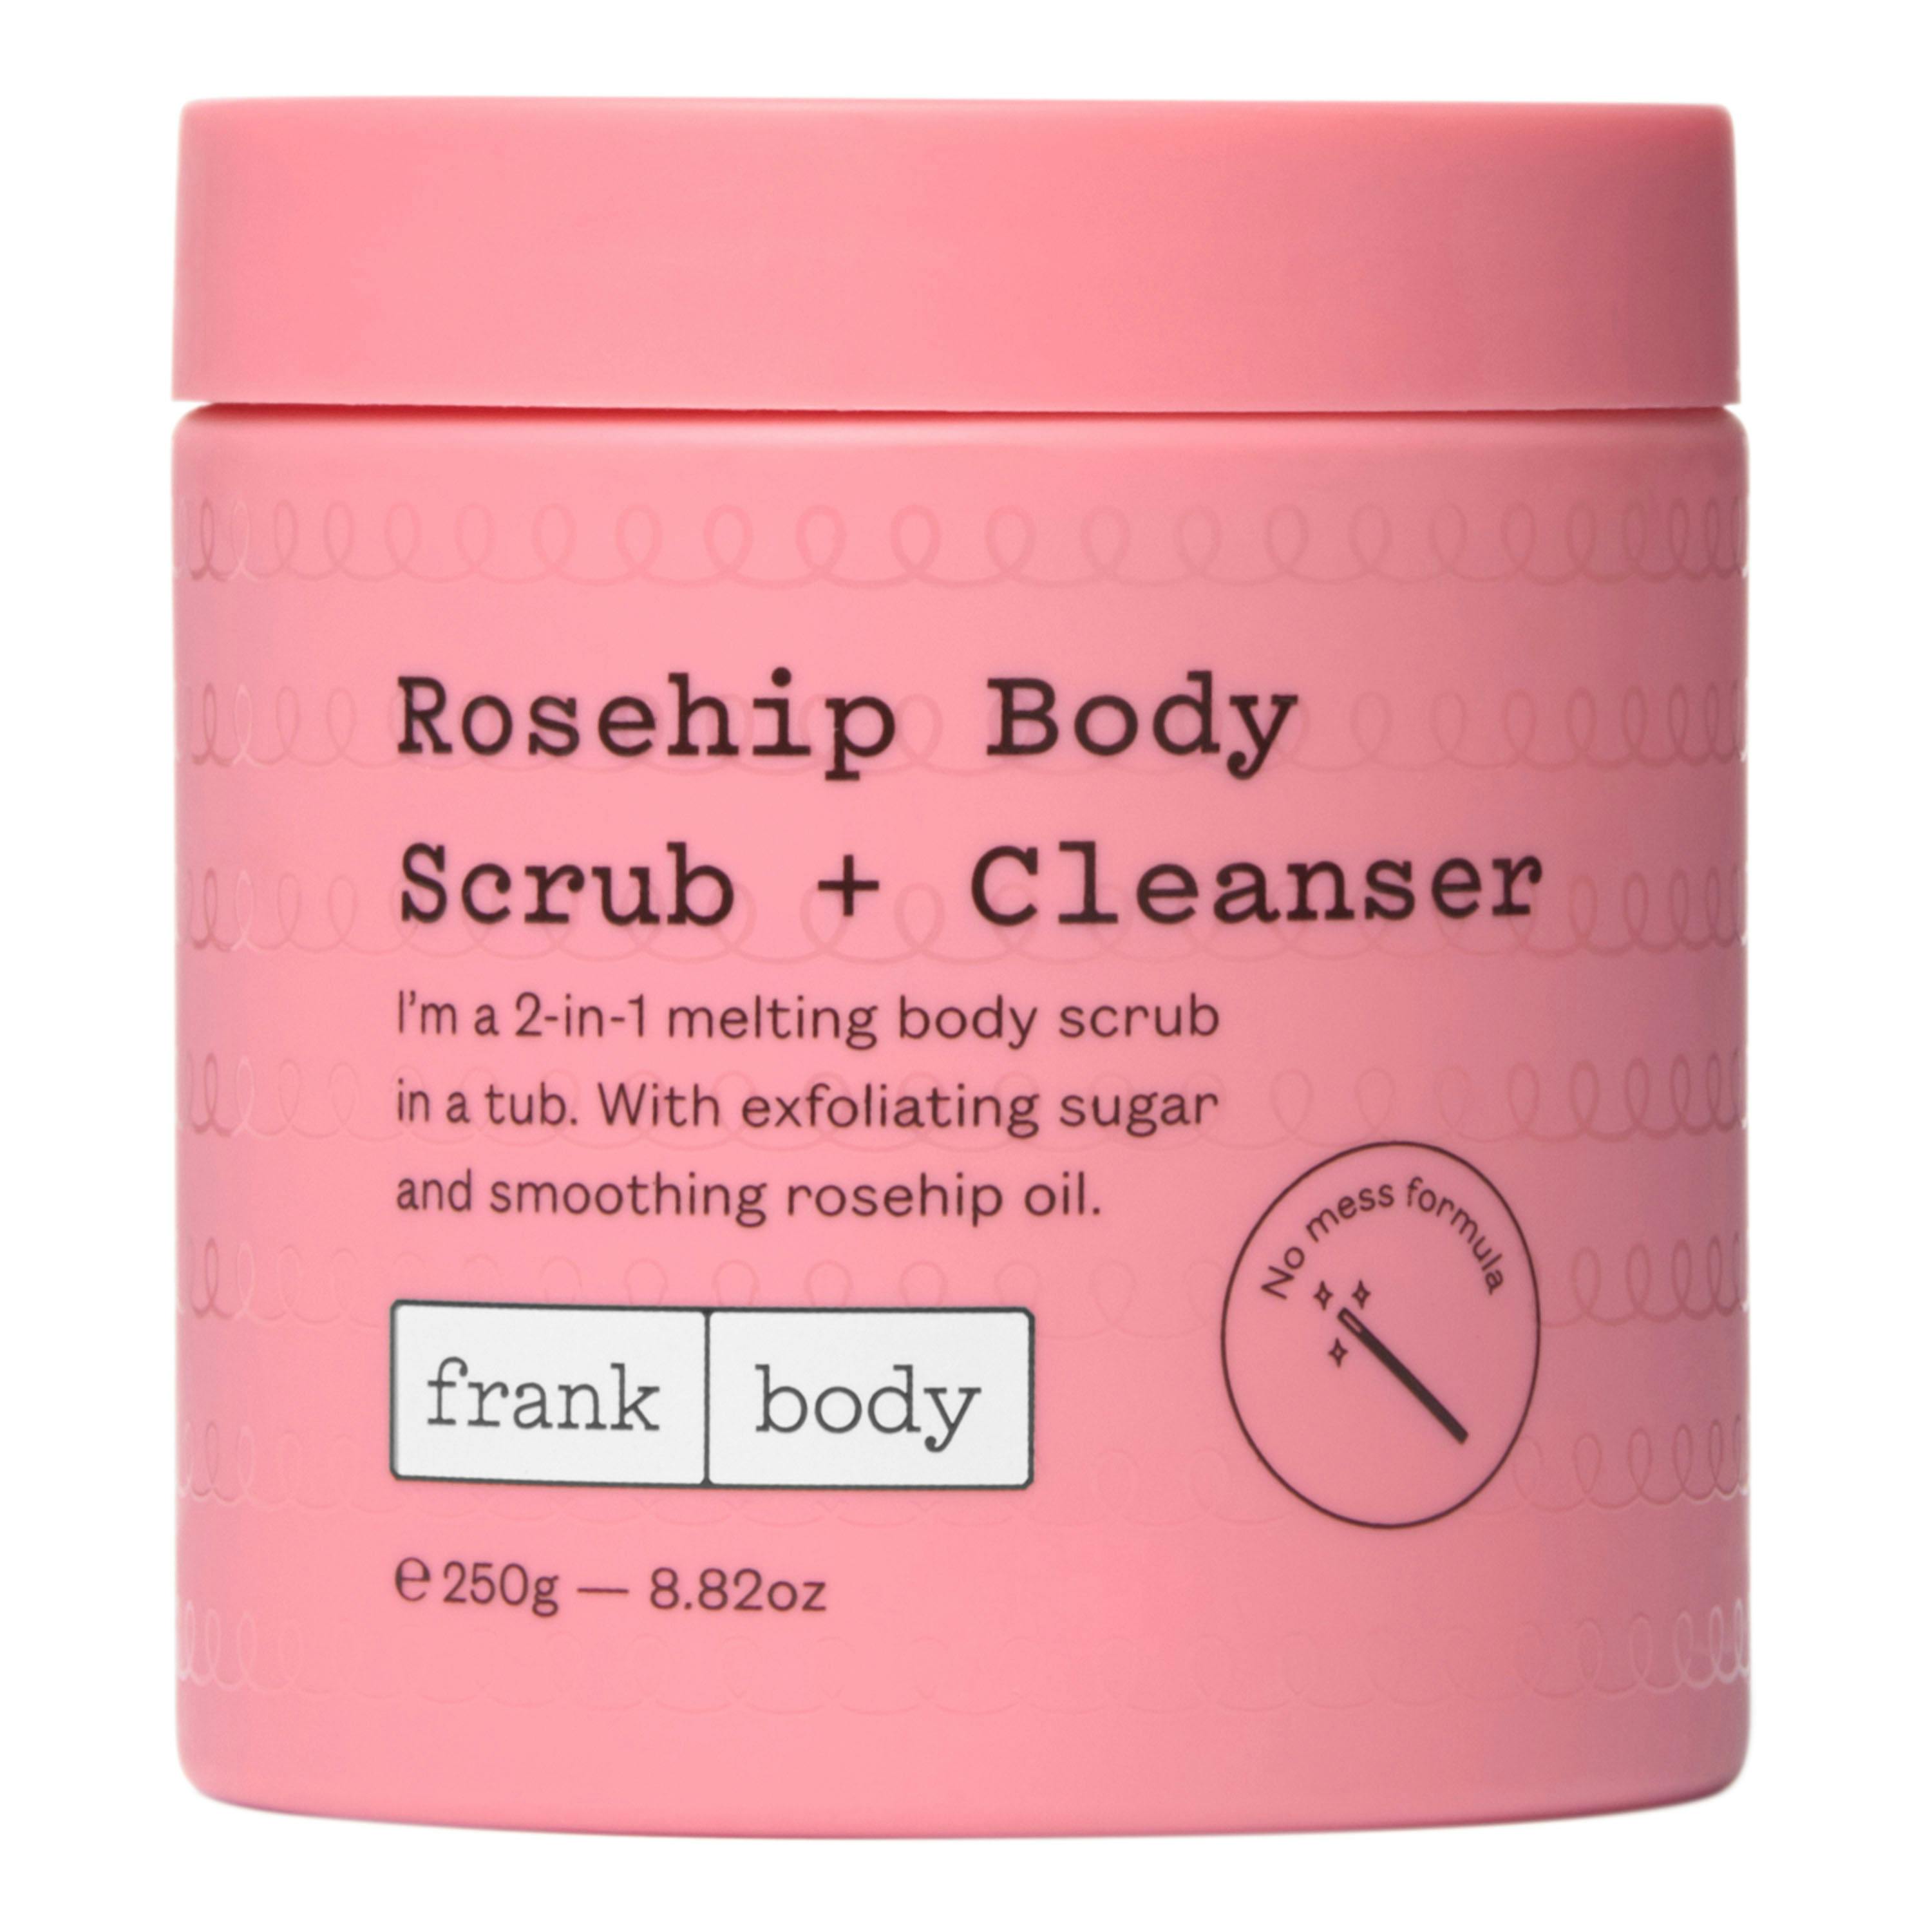 Frank Body Rosehip Body Scrub + Cleanser Körperpeeling